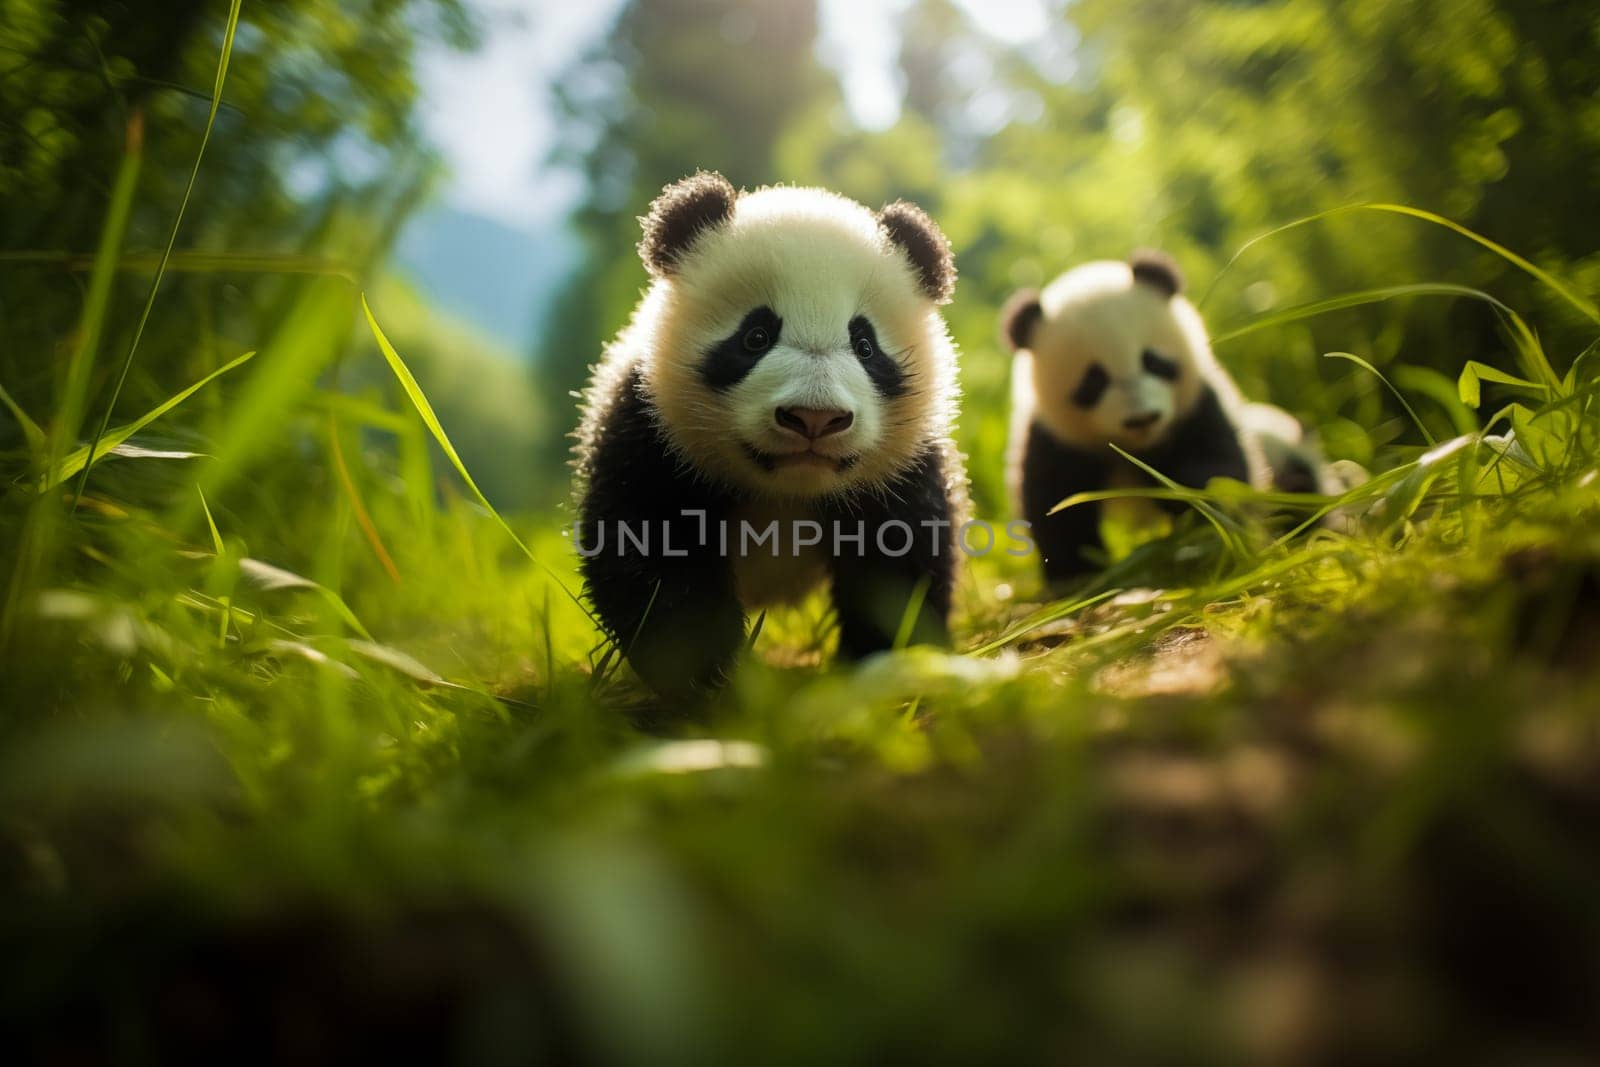 Adorable Panda Cubs in a Bamboo Grove by dimol